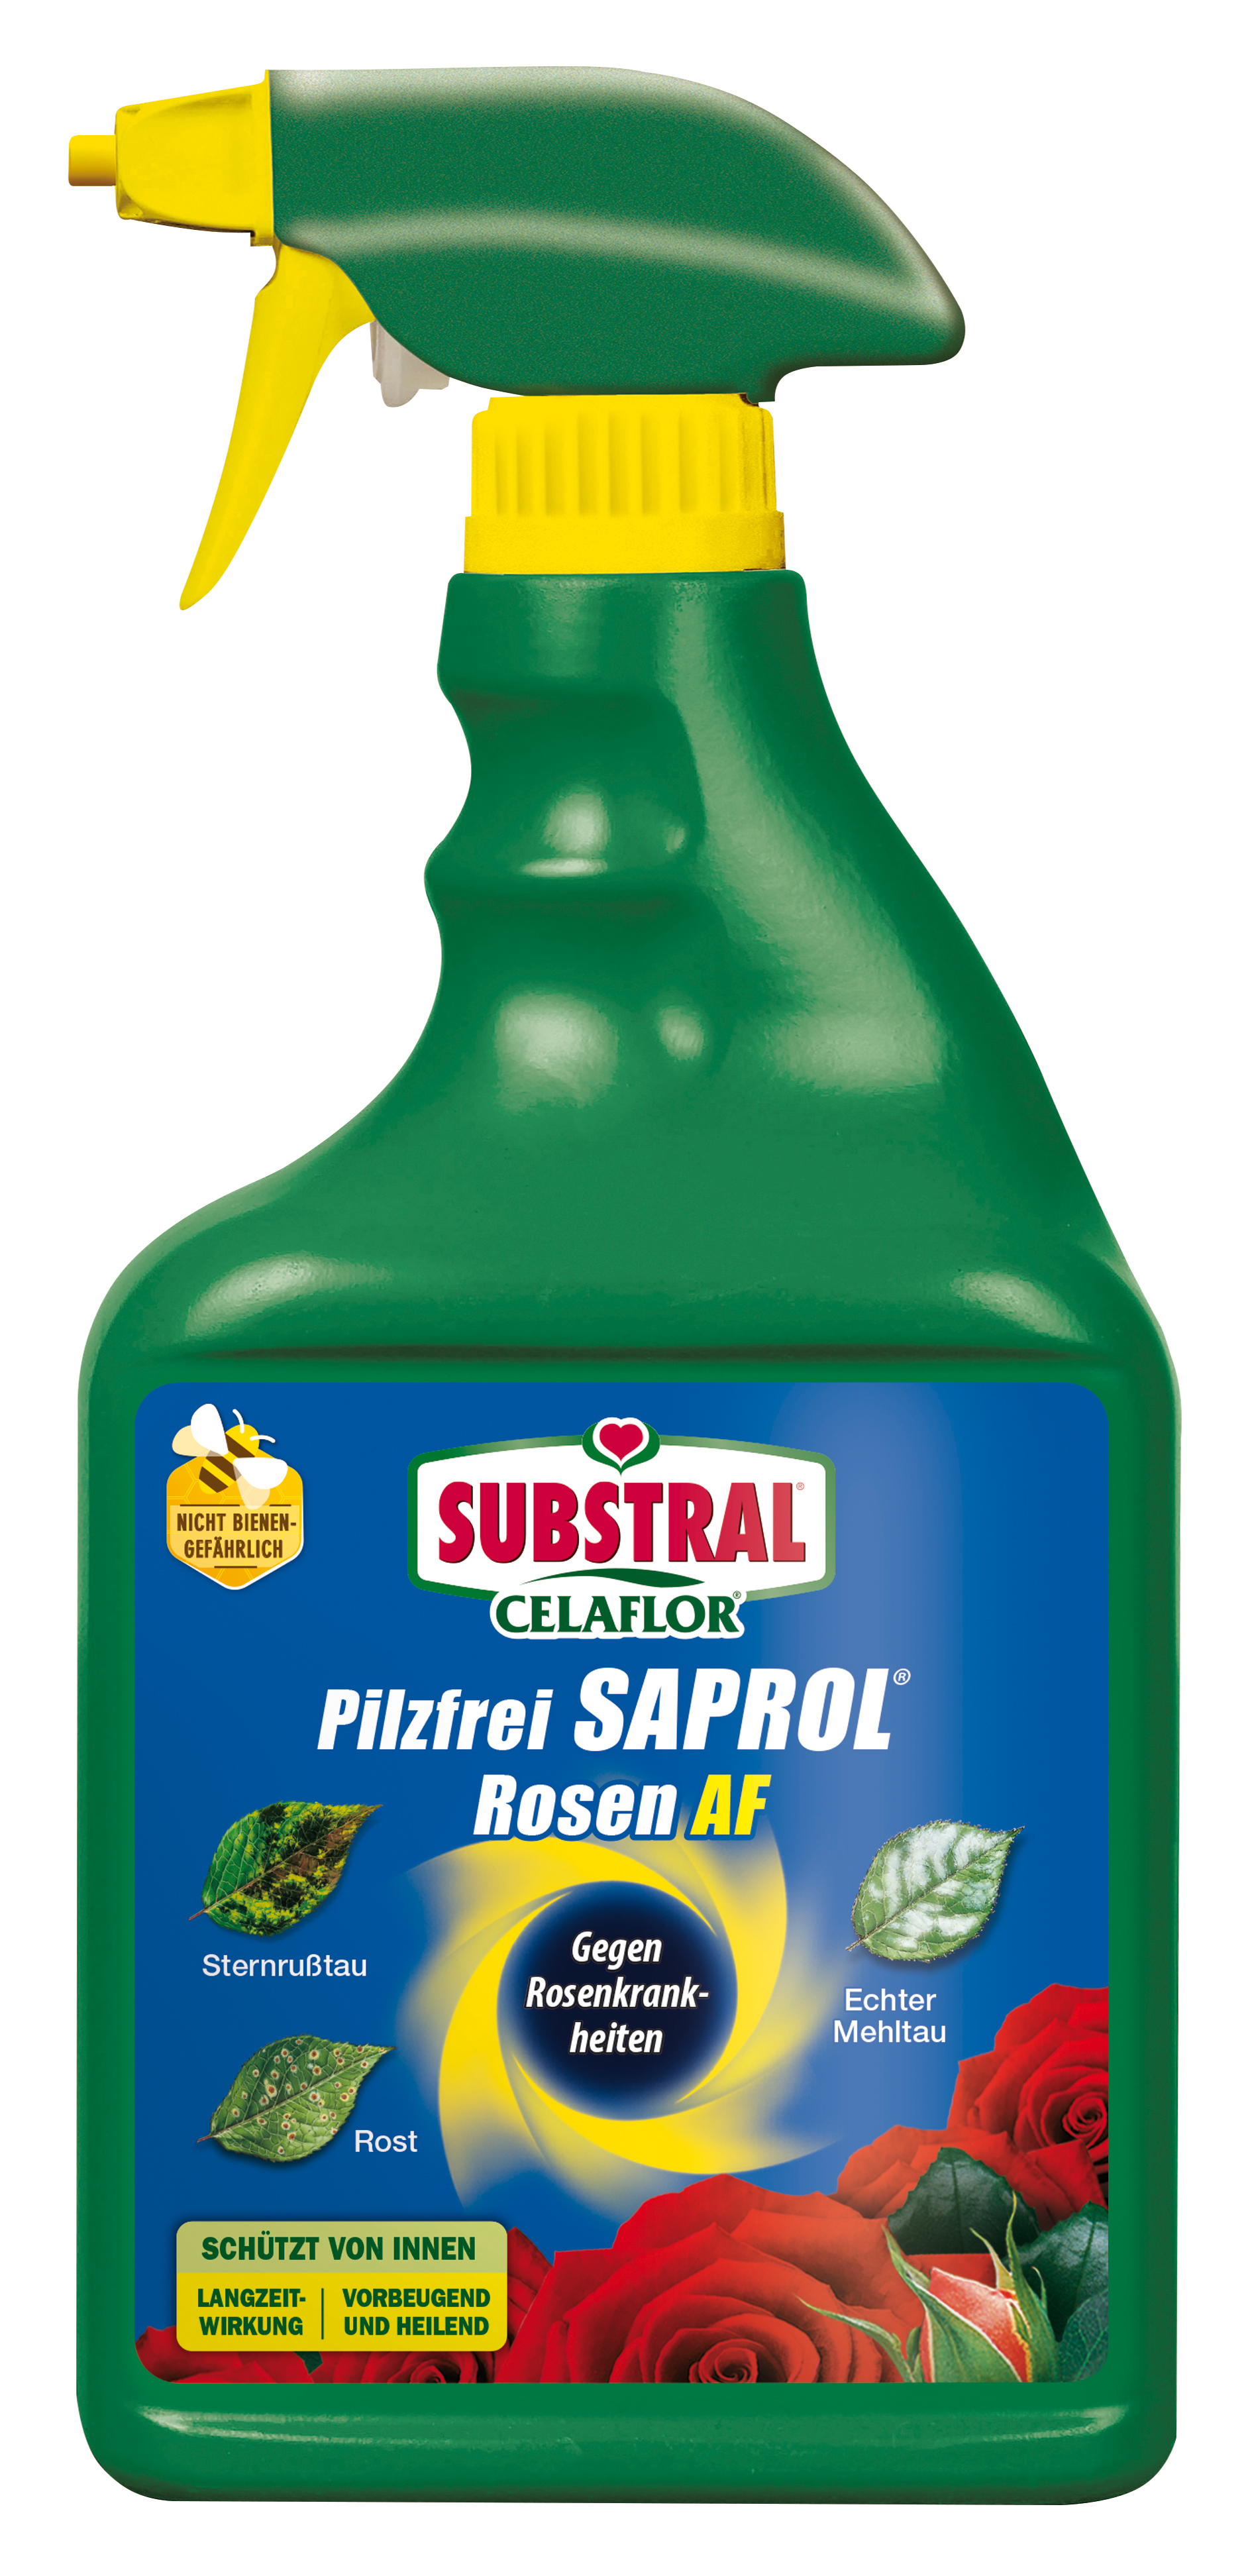 Celaflor Pilzfrei Saprol Rosen AF 750ml